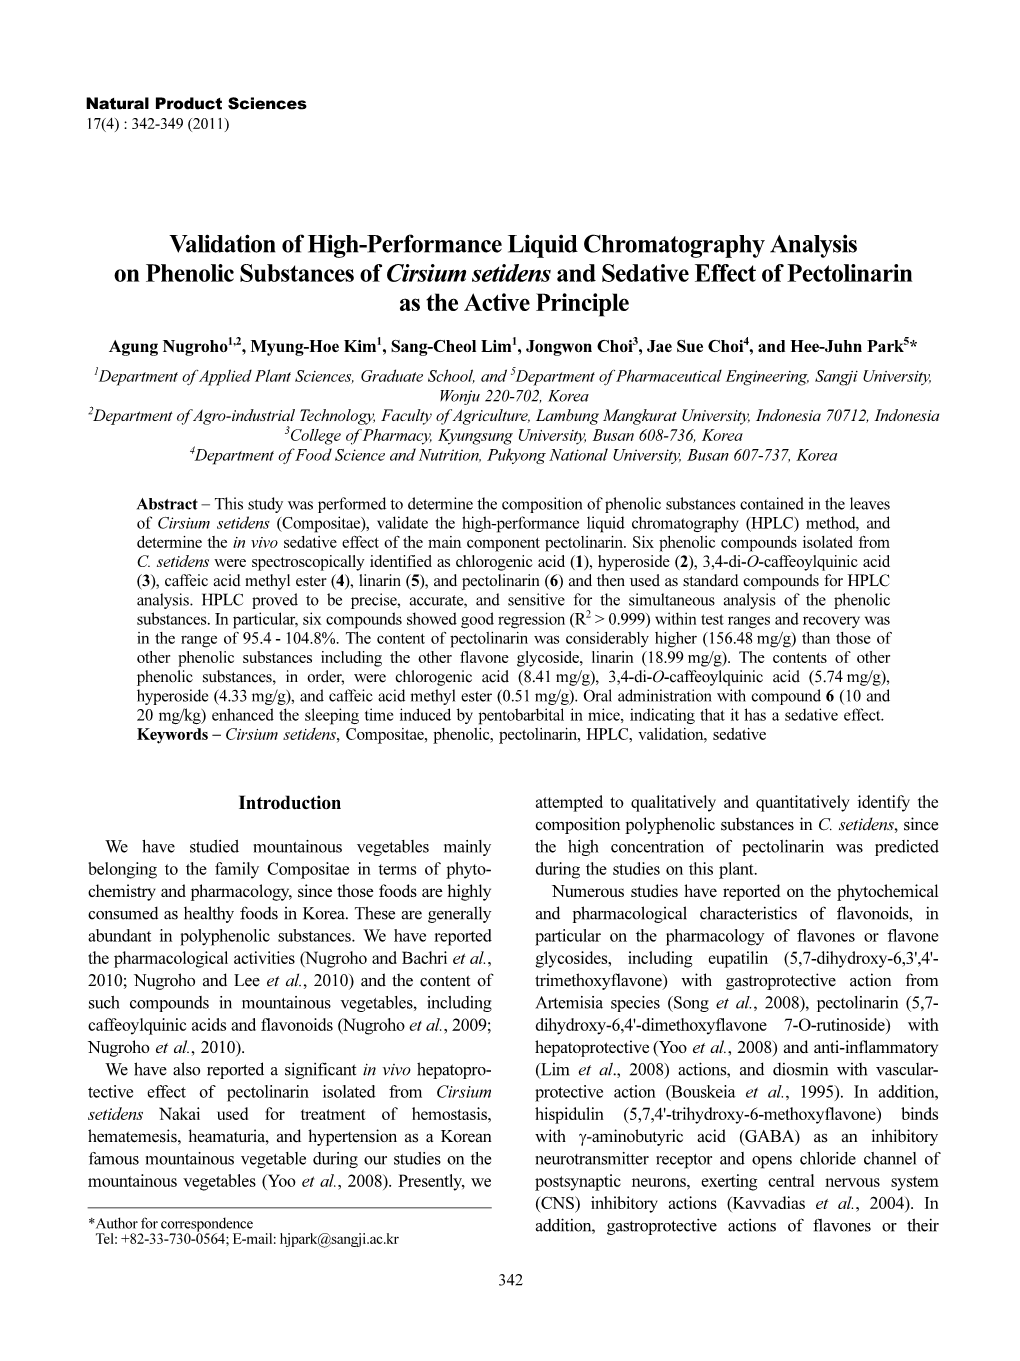 Validation of High-Performance Liquid Chromatography Analysis on Phenolic Substances of Cirsium Setidens and Sedative Effect of Pectolinarin As the Active Principle